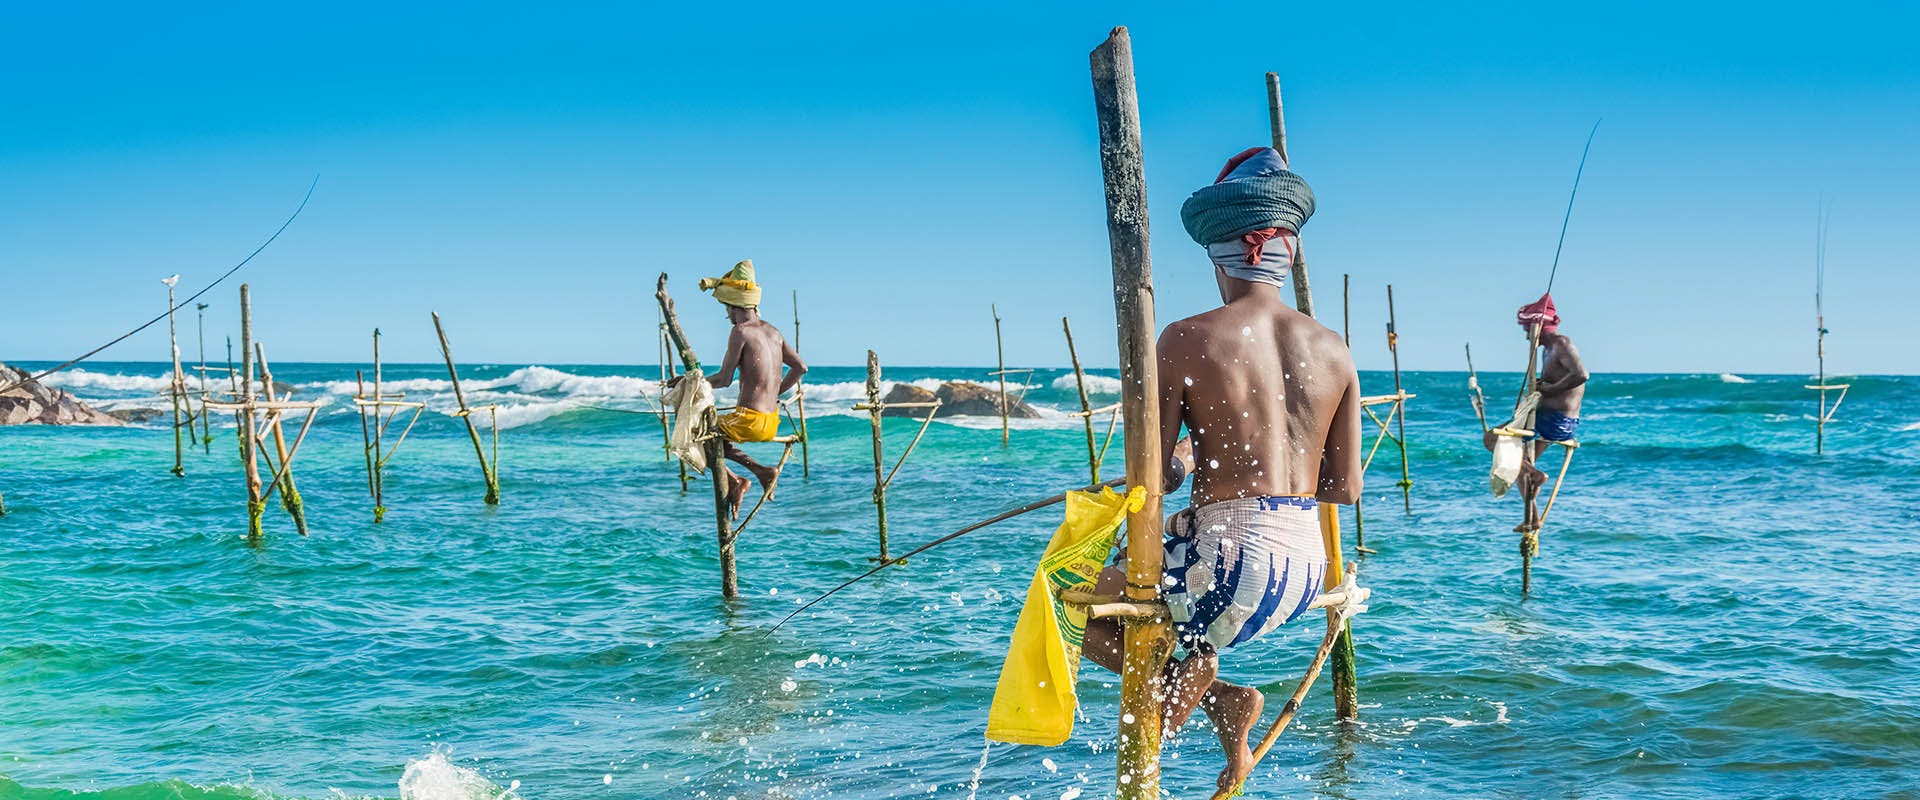 Stilt Fisherman at Ahangama Weligama Galle